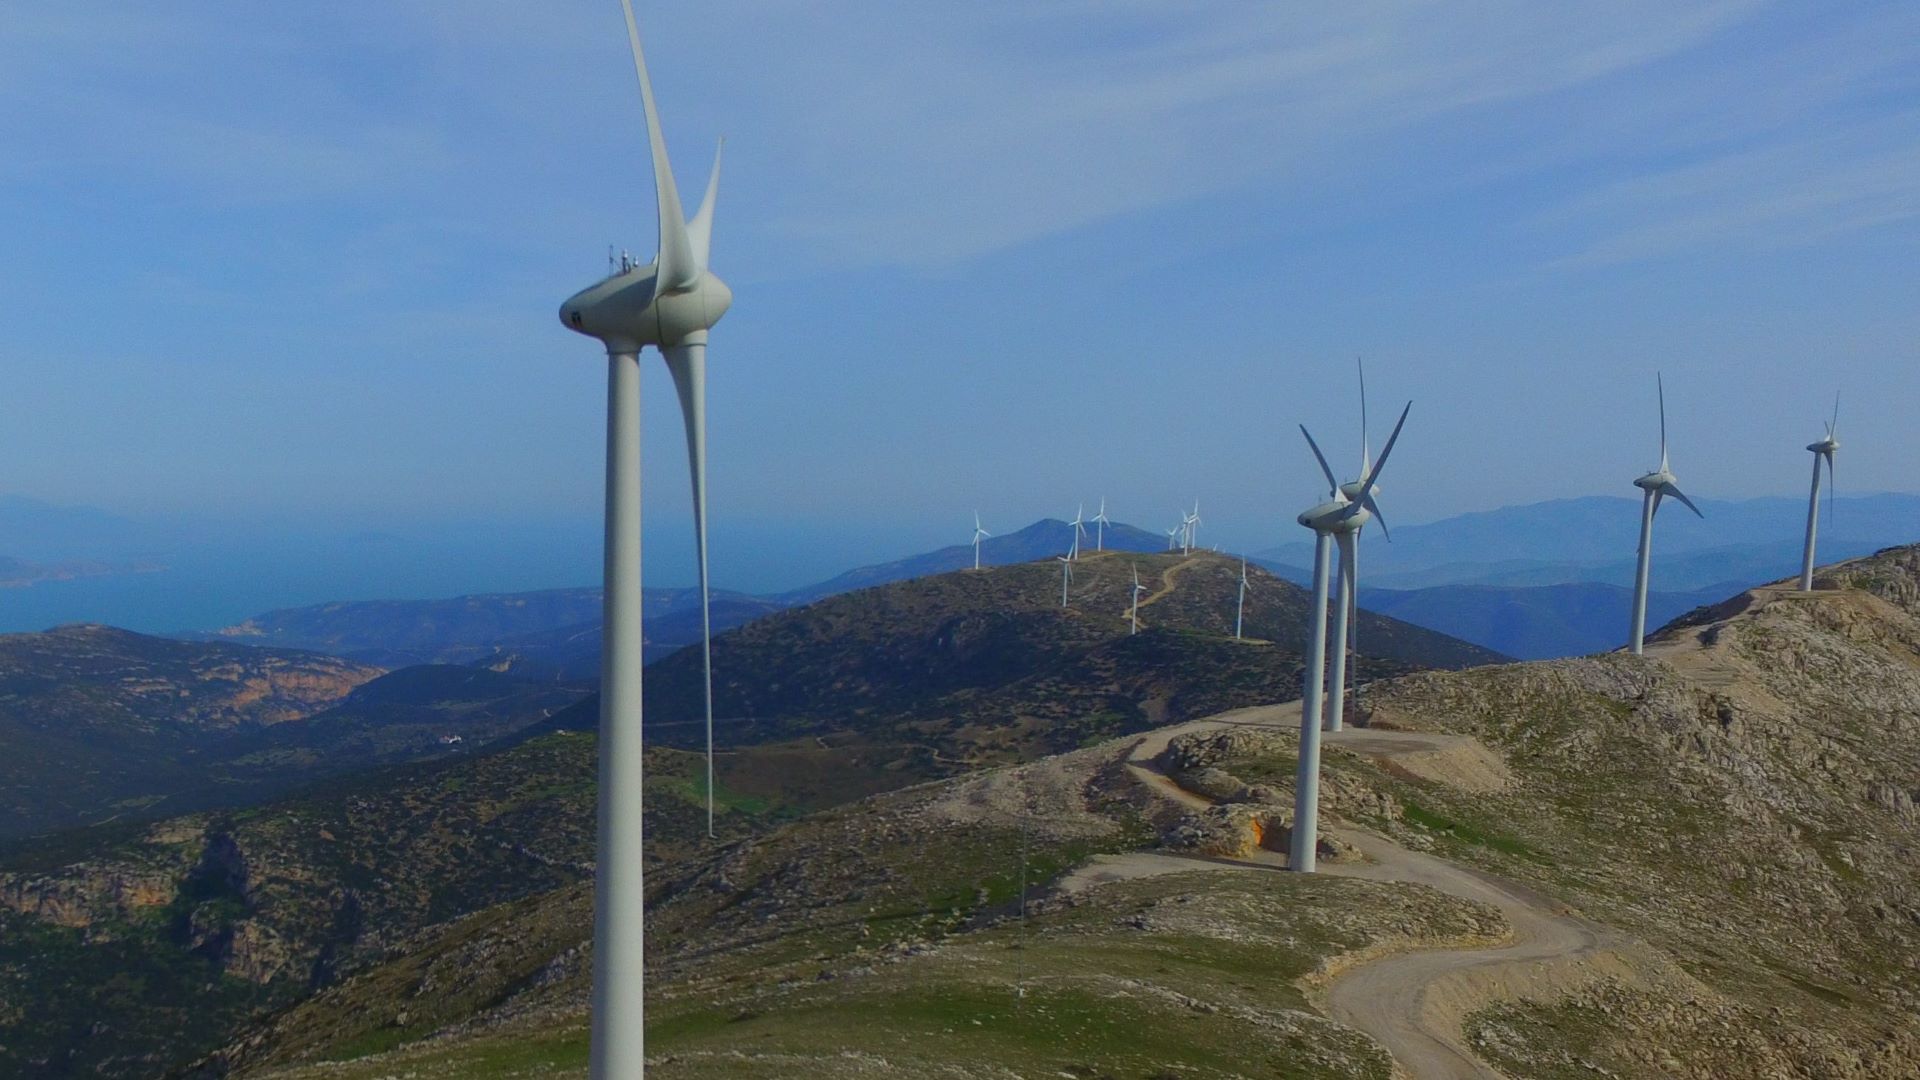 Image of the wind farms in Desfina